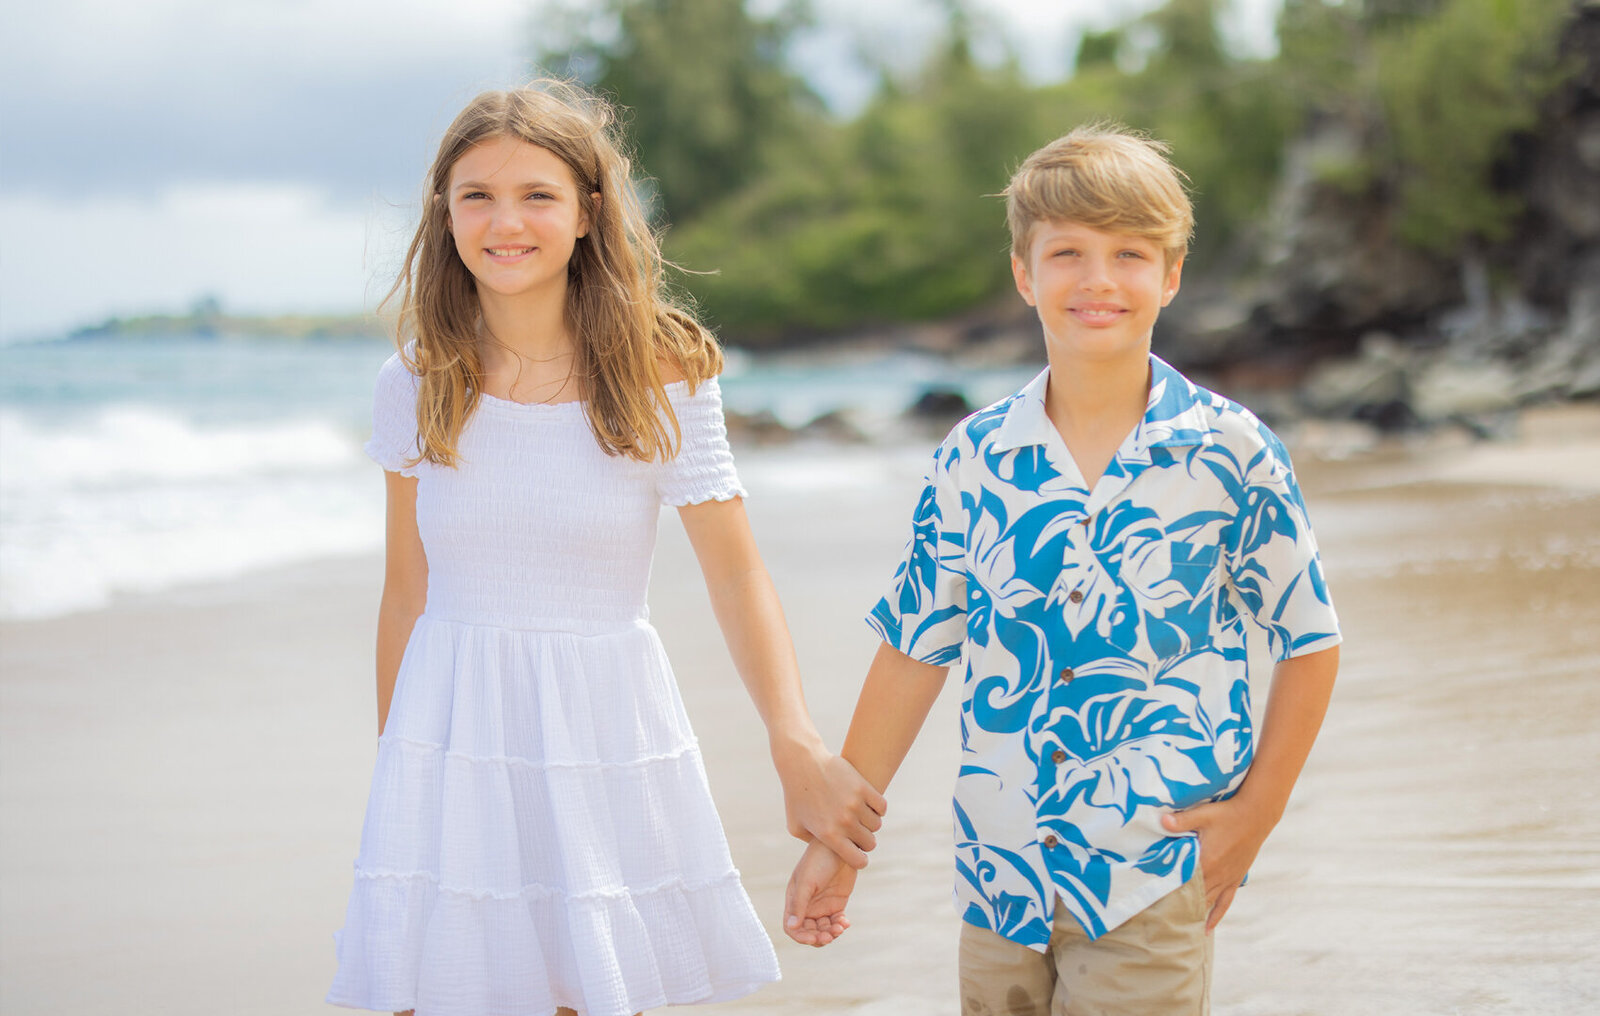 Andaz Resort Maui Family Photographers